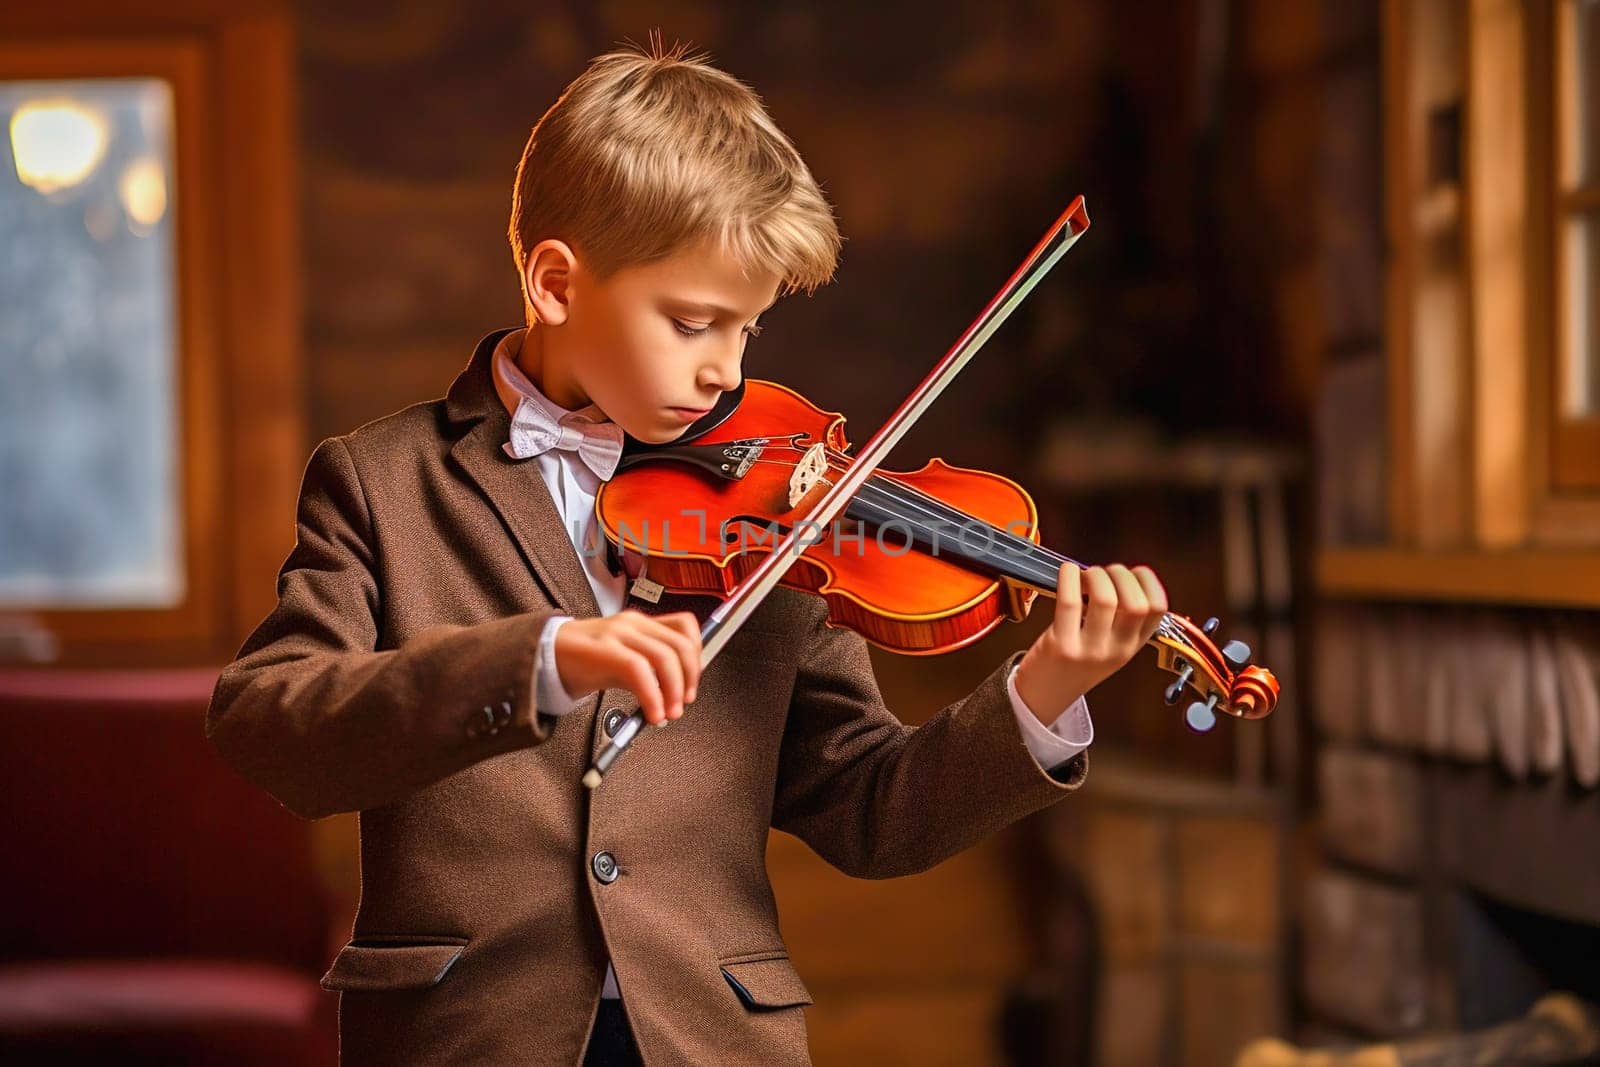 A focused boy plays the violin. by Yurich32